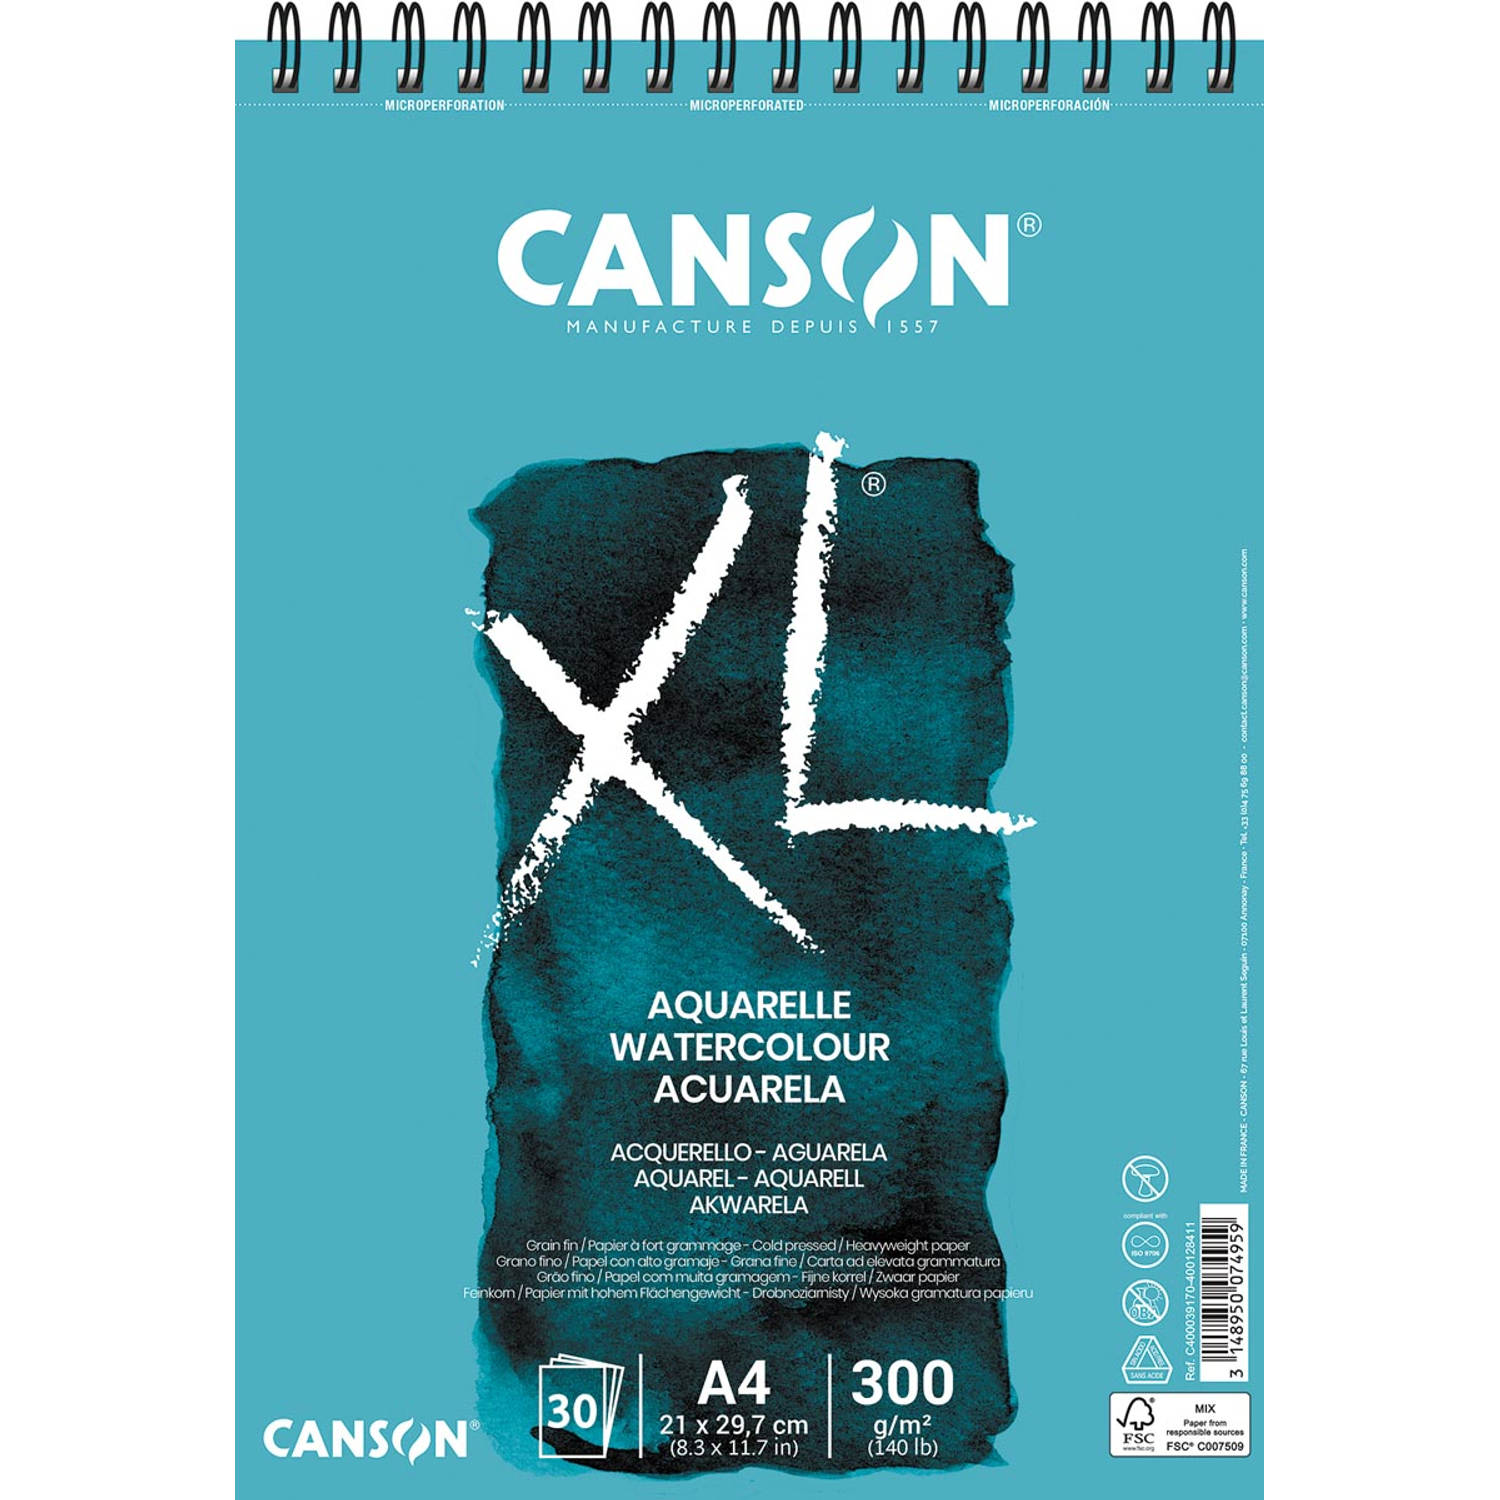 Canson schetsblok xl aquarelle 300g-m² ft a4, 30 vel